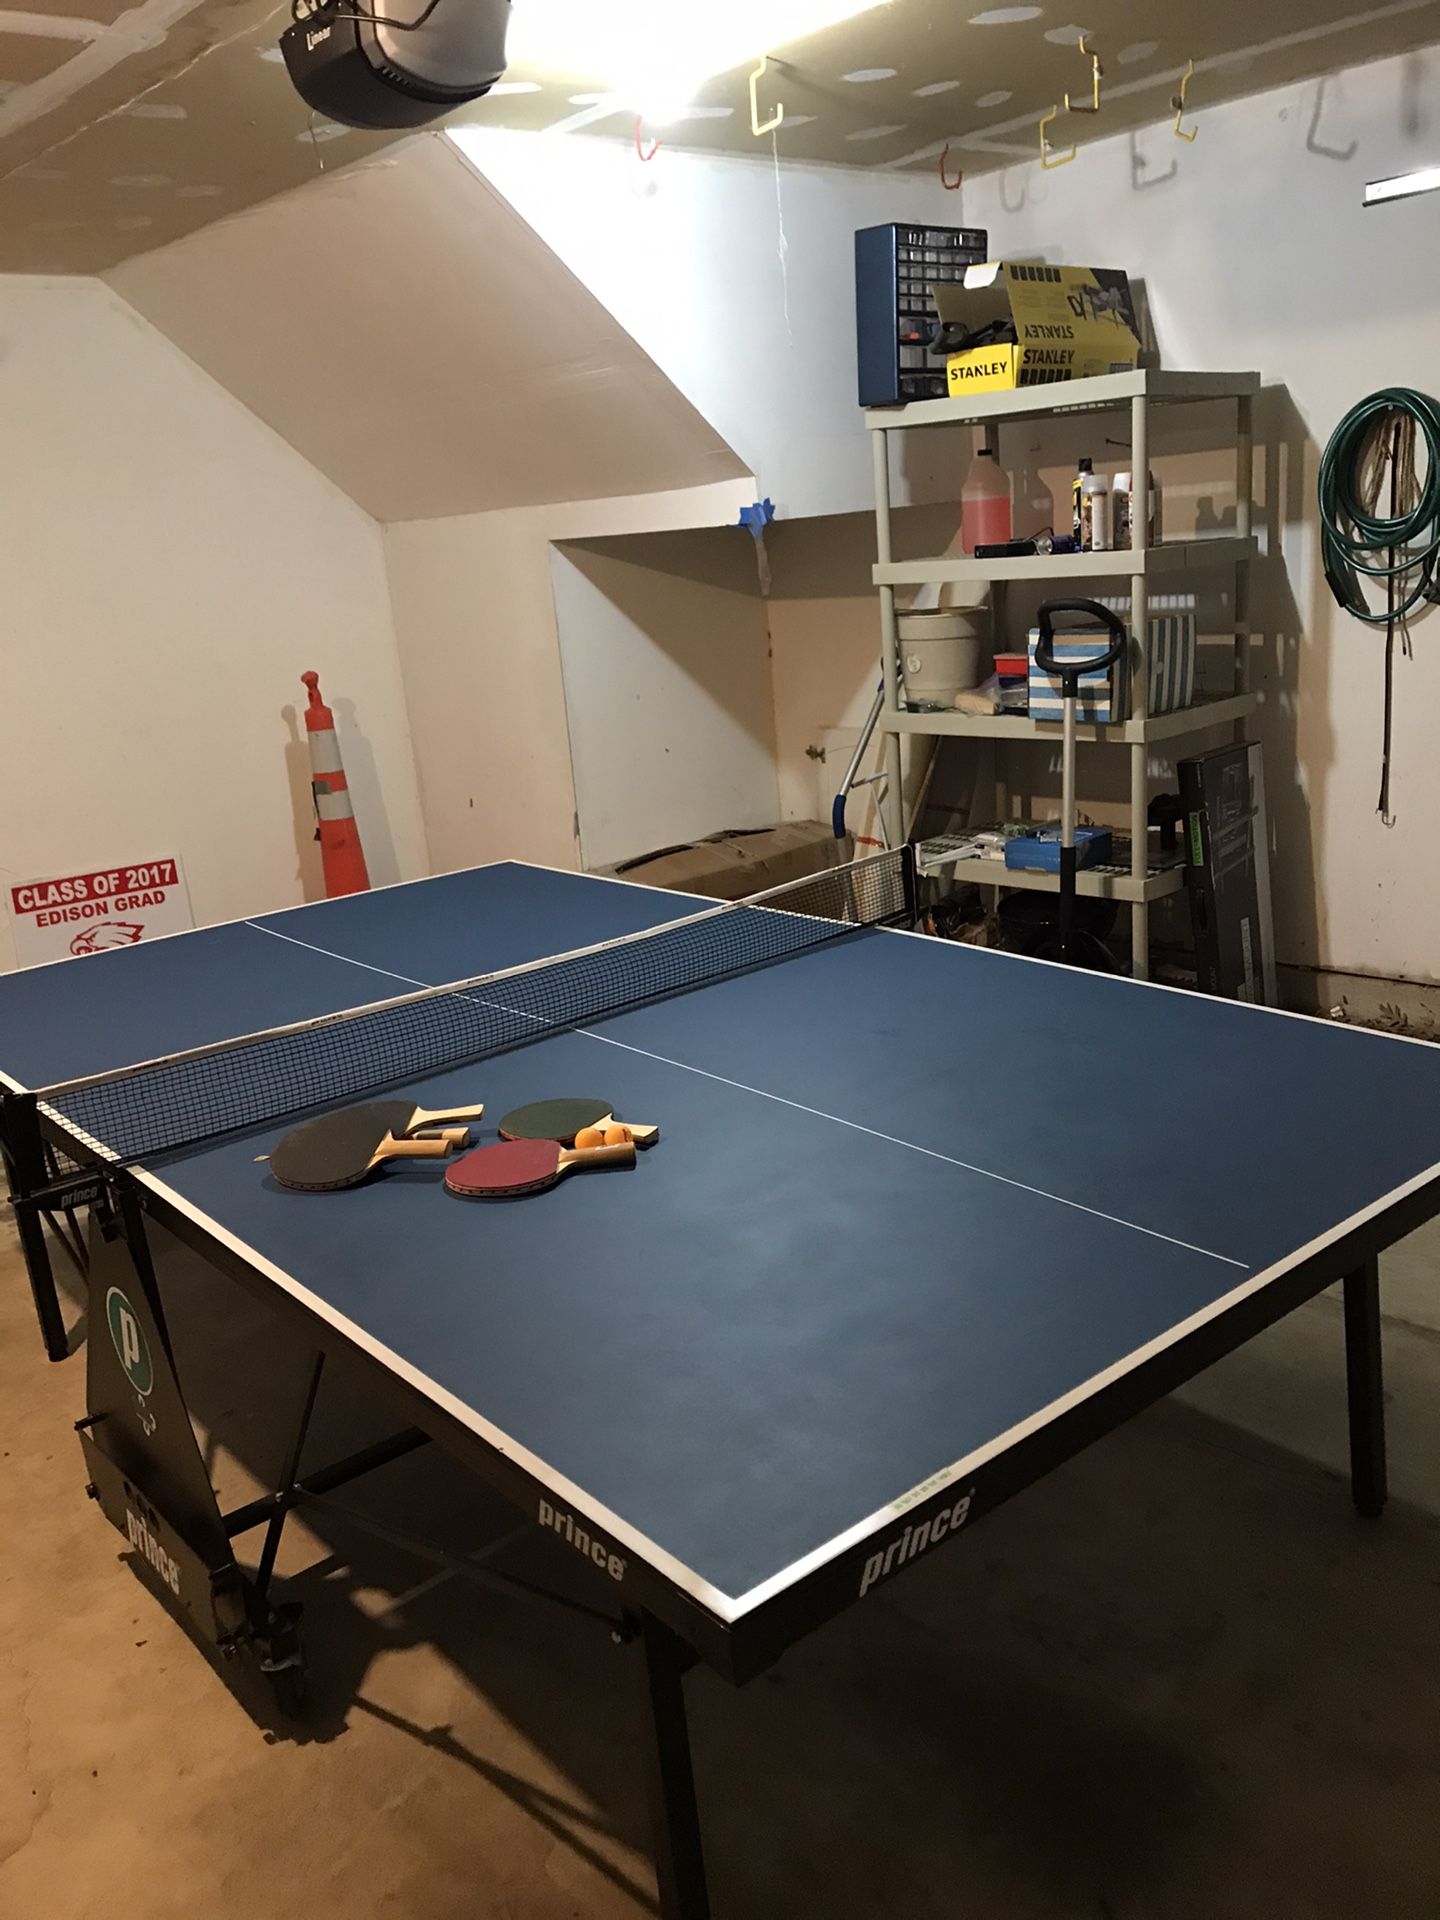 Ping pong table